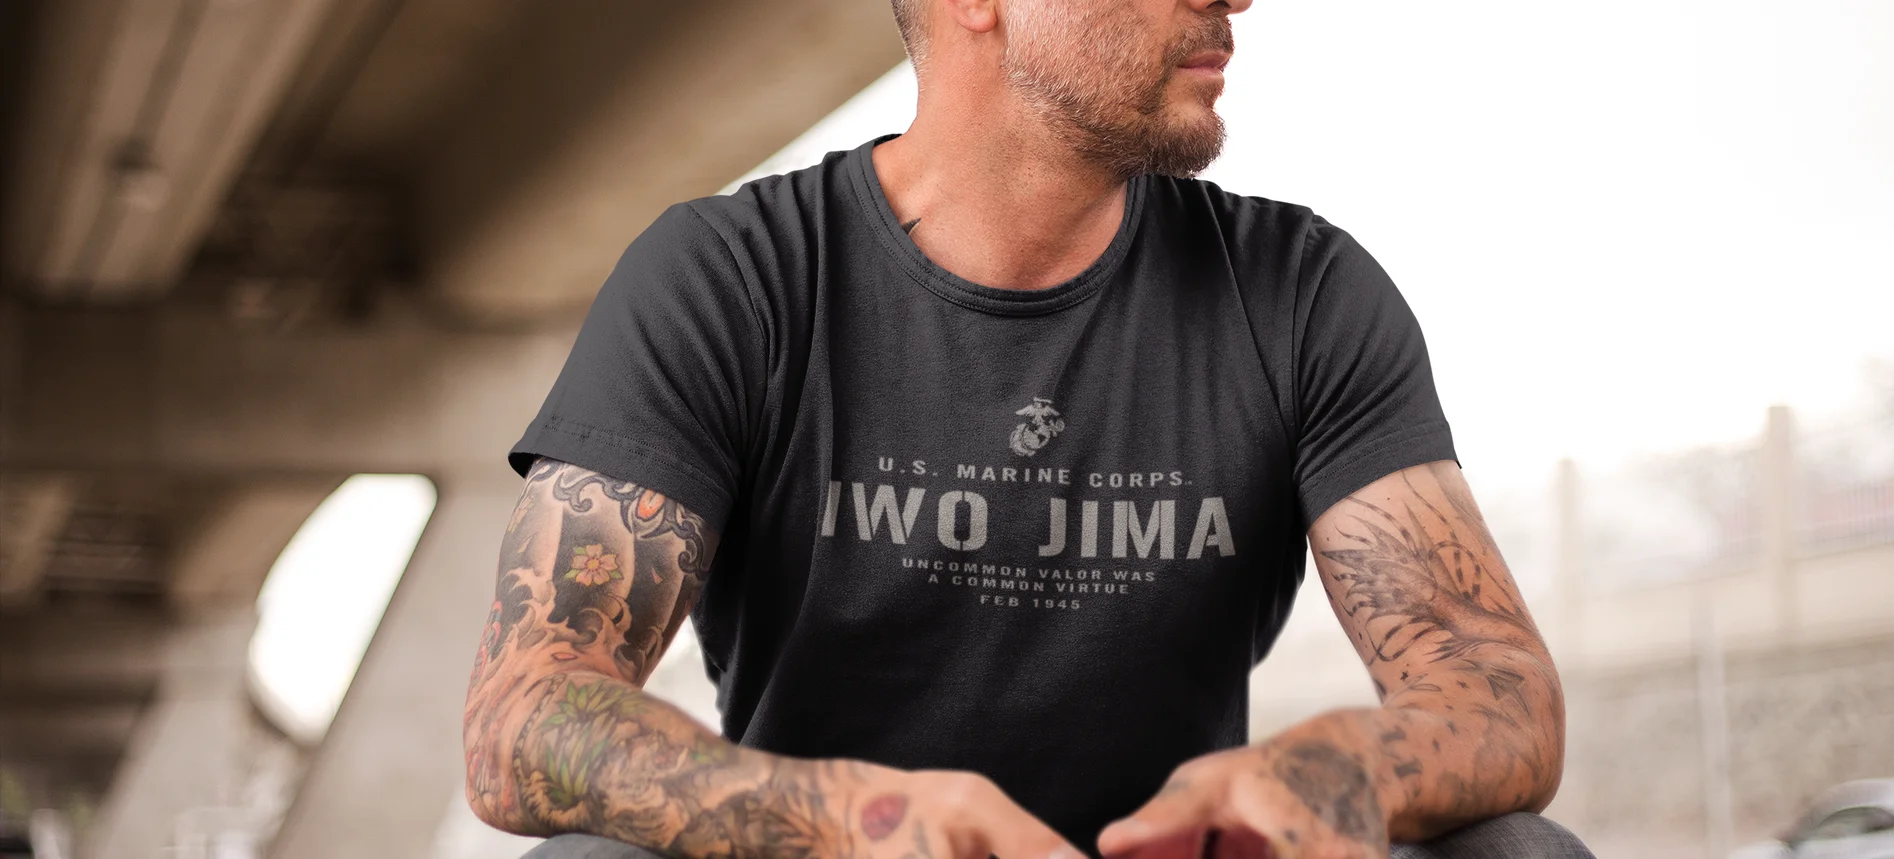 USMC OIF Veteran wearing a Battle of Iwo Jima Memorial shirt by Tactically Acquired.